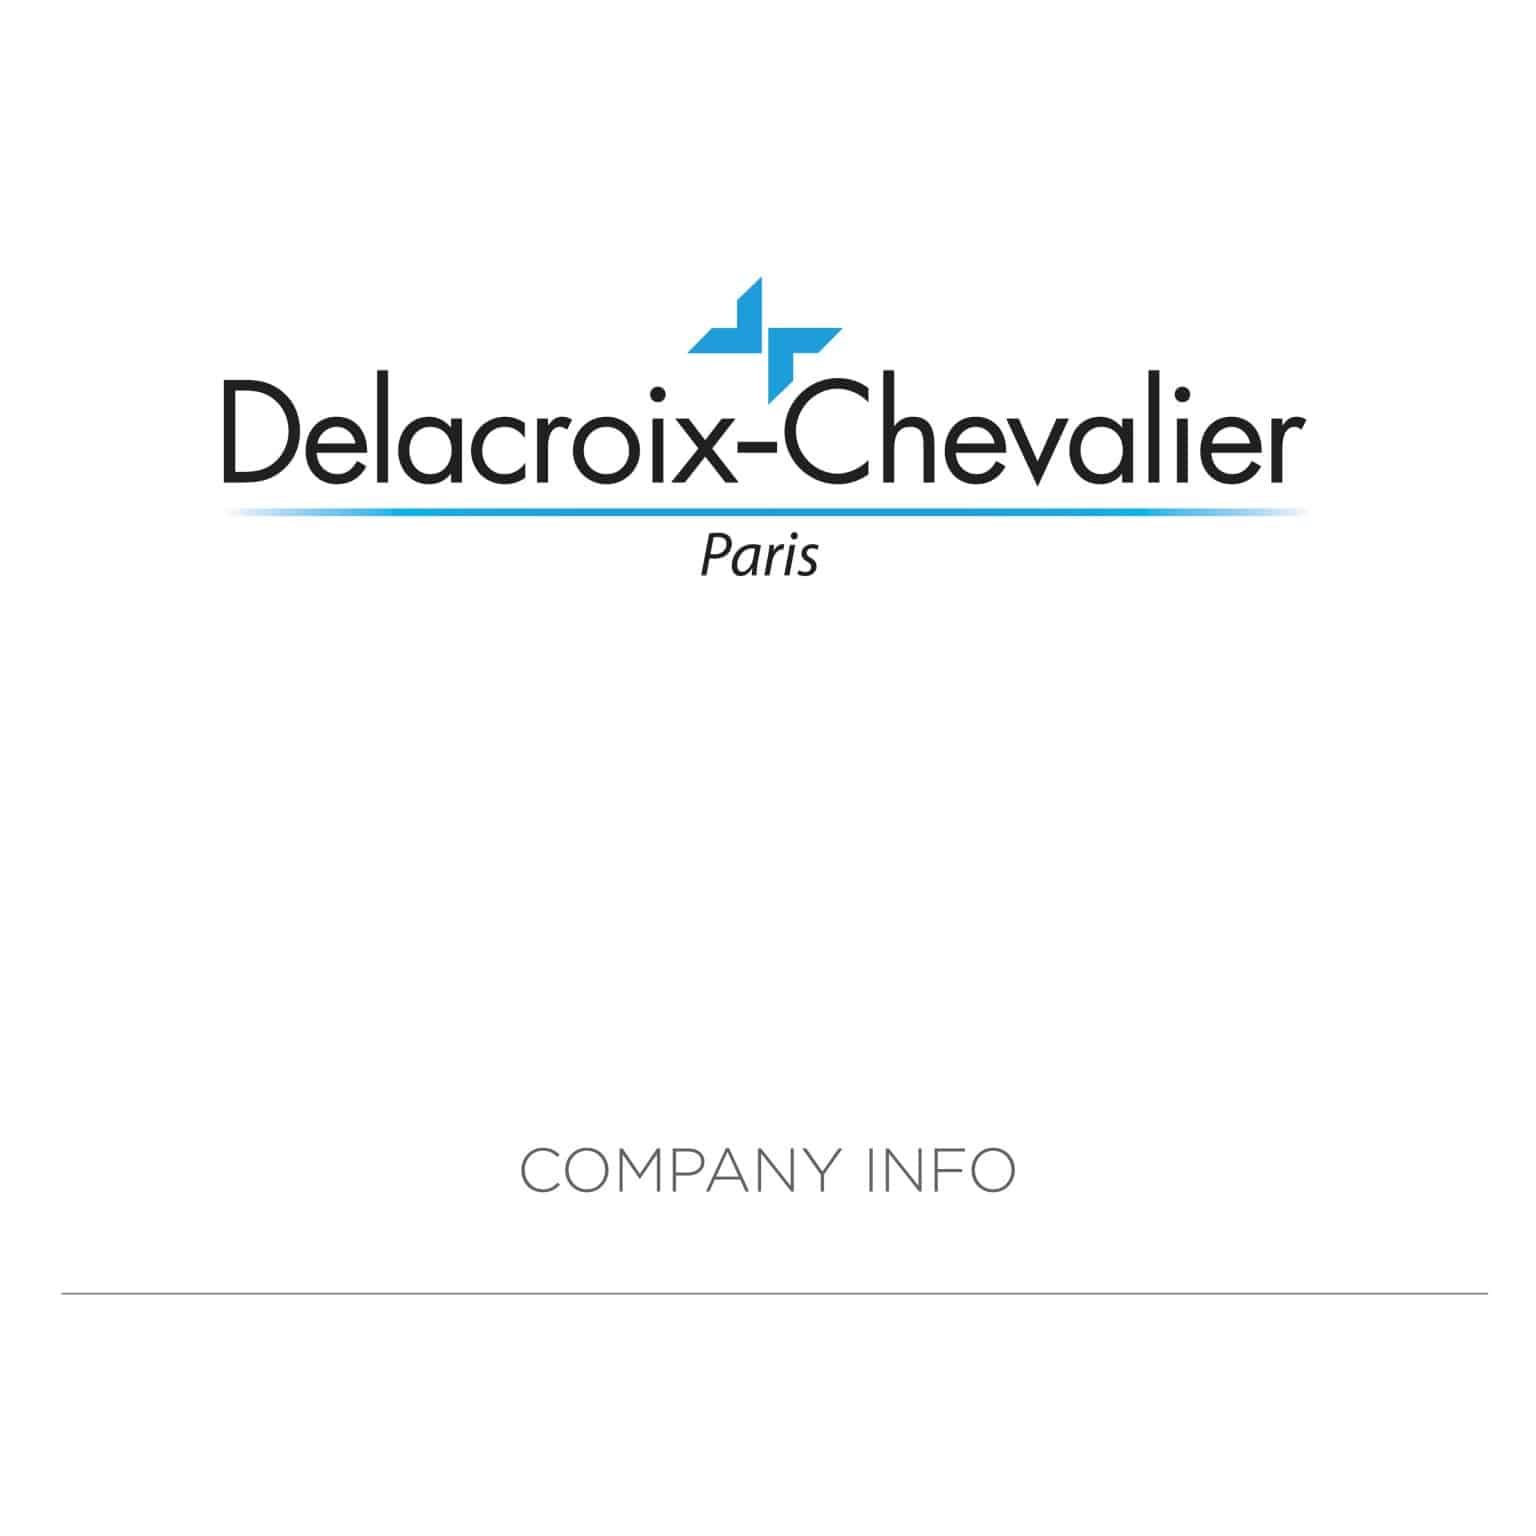 Delacroix-Chevalier Company Info